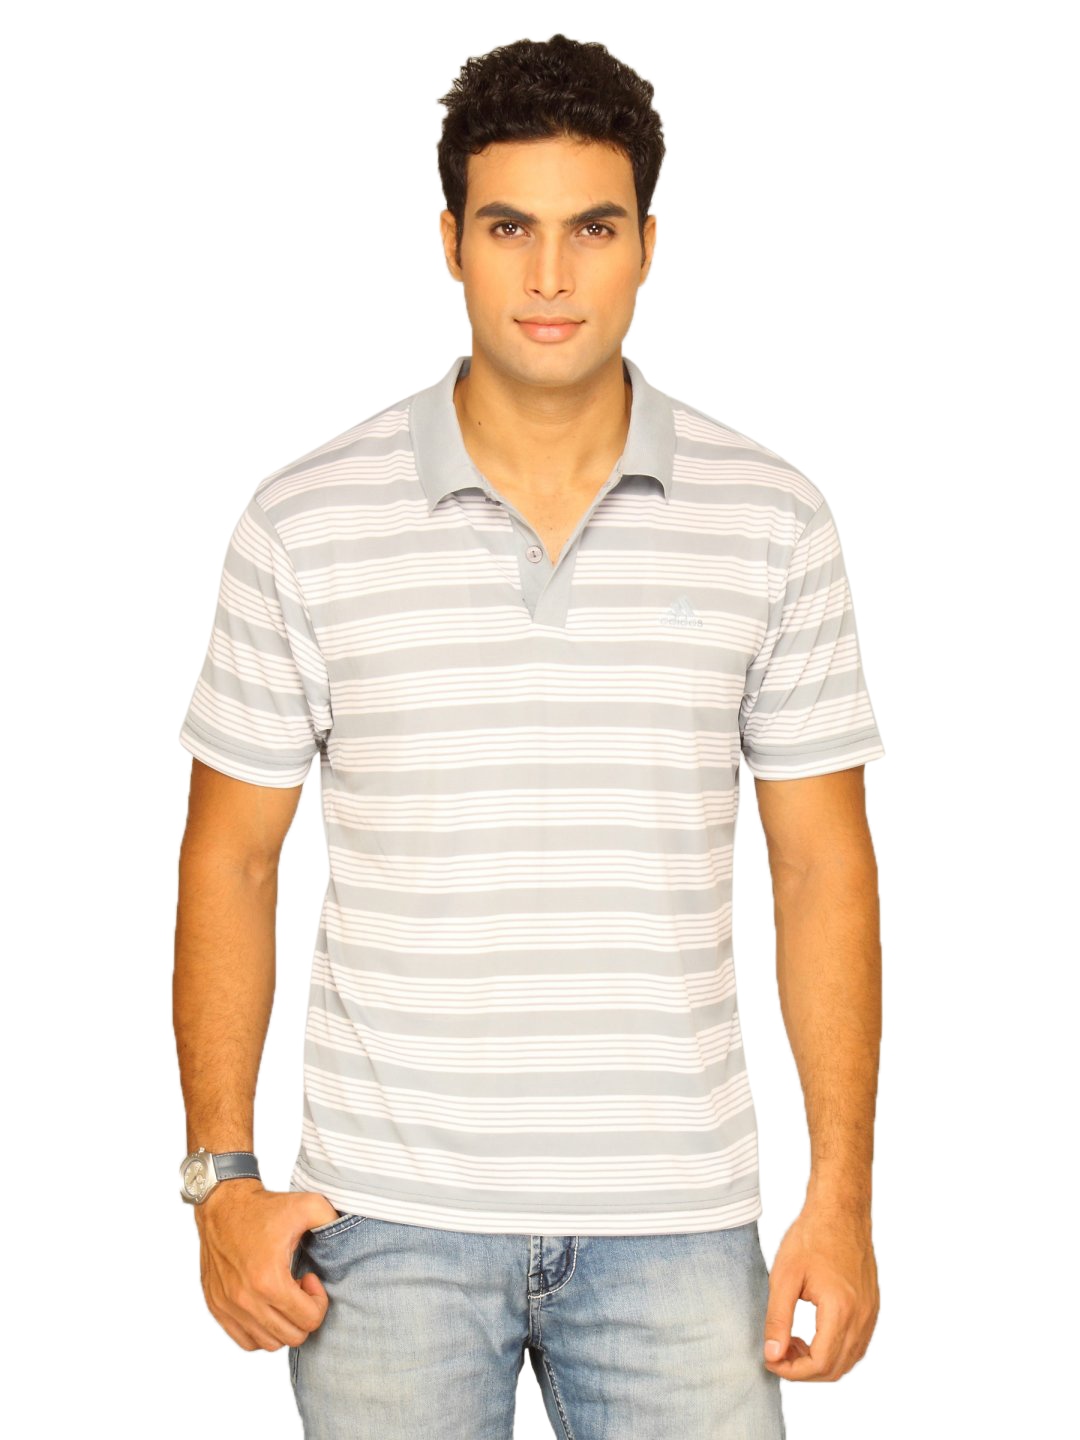 ADIDAS Men's Perf Str Polo Light Grey T-Shirt